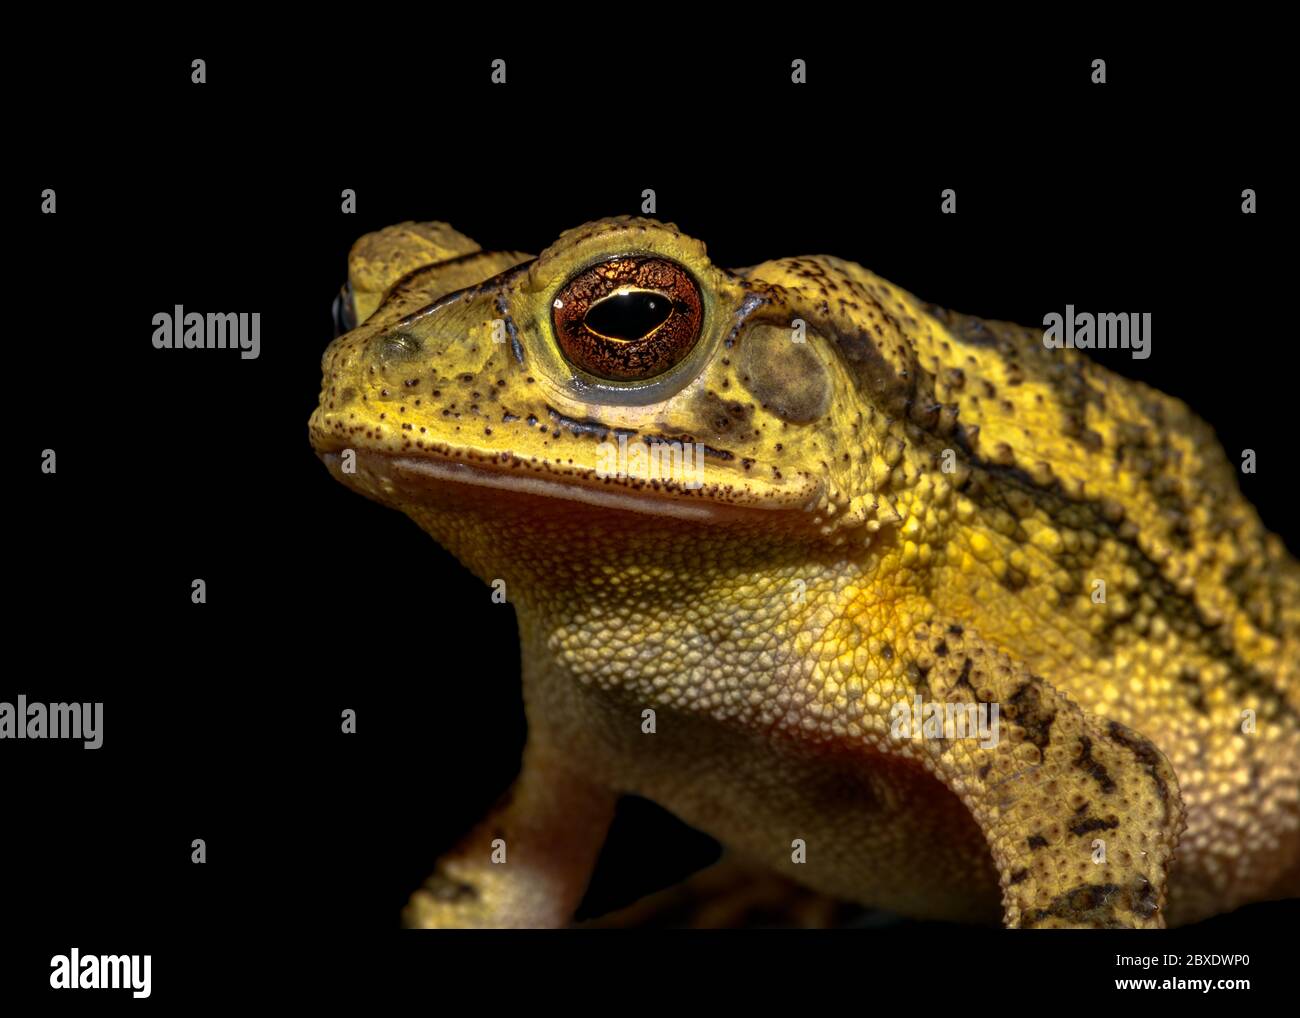 gulf coast toad (Incilius valliceps) on black background Stock Photo